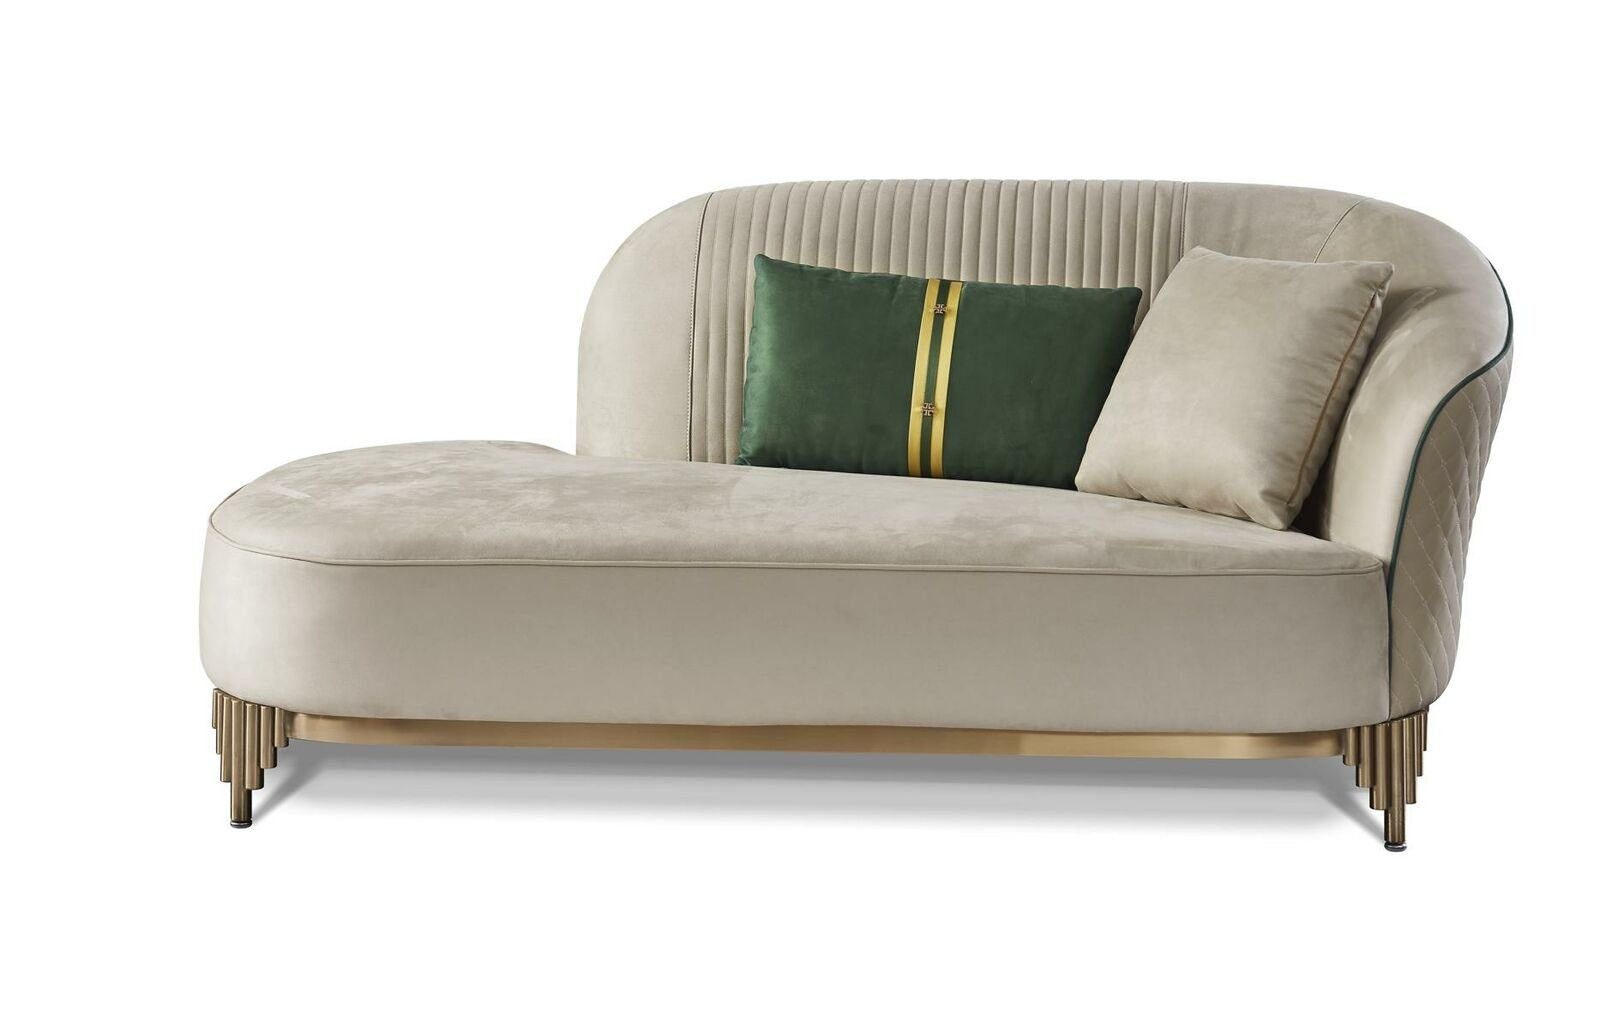 JVmoebel Chaiselongue Chaiselongues Sofa Couch Liege mane Luxus Liegen Designer, Made in Europe